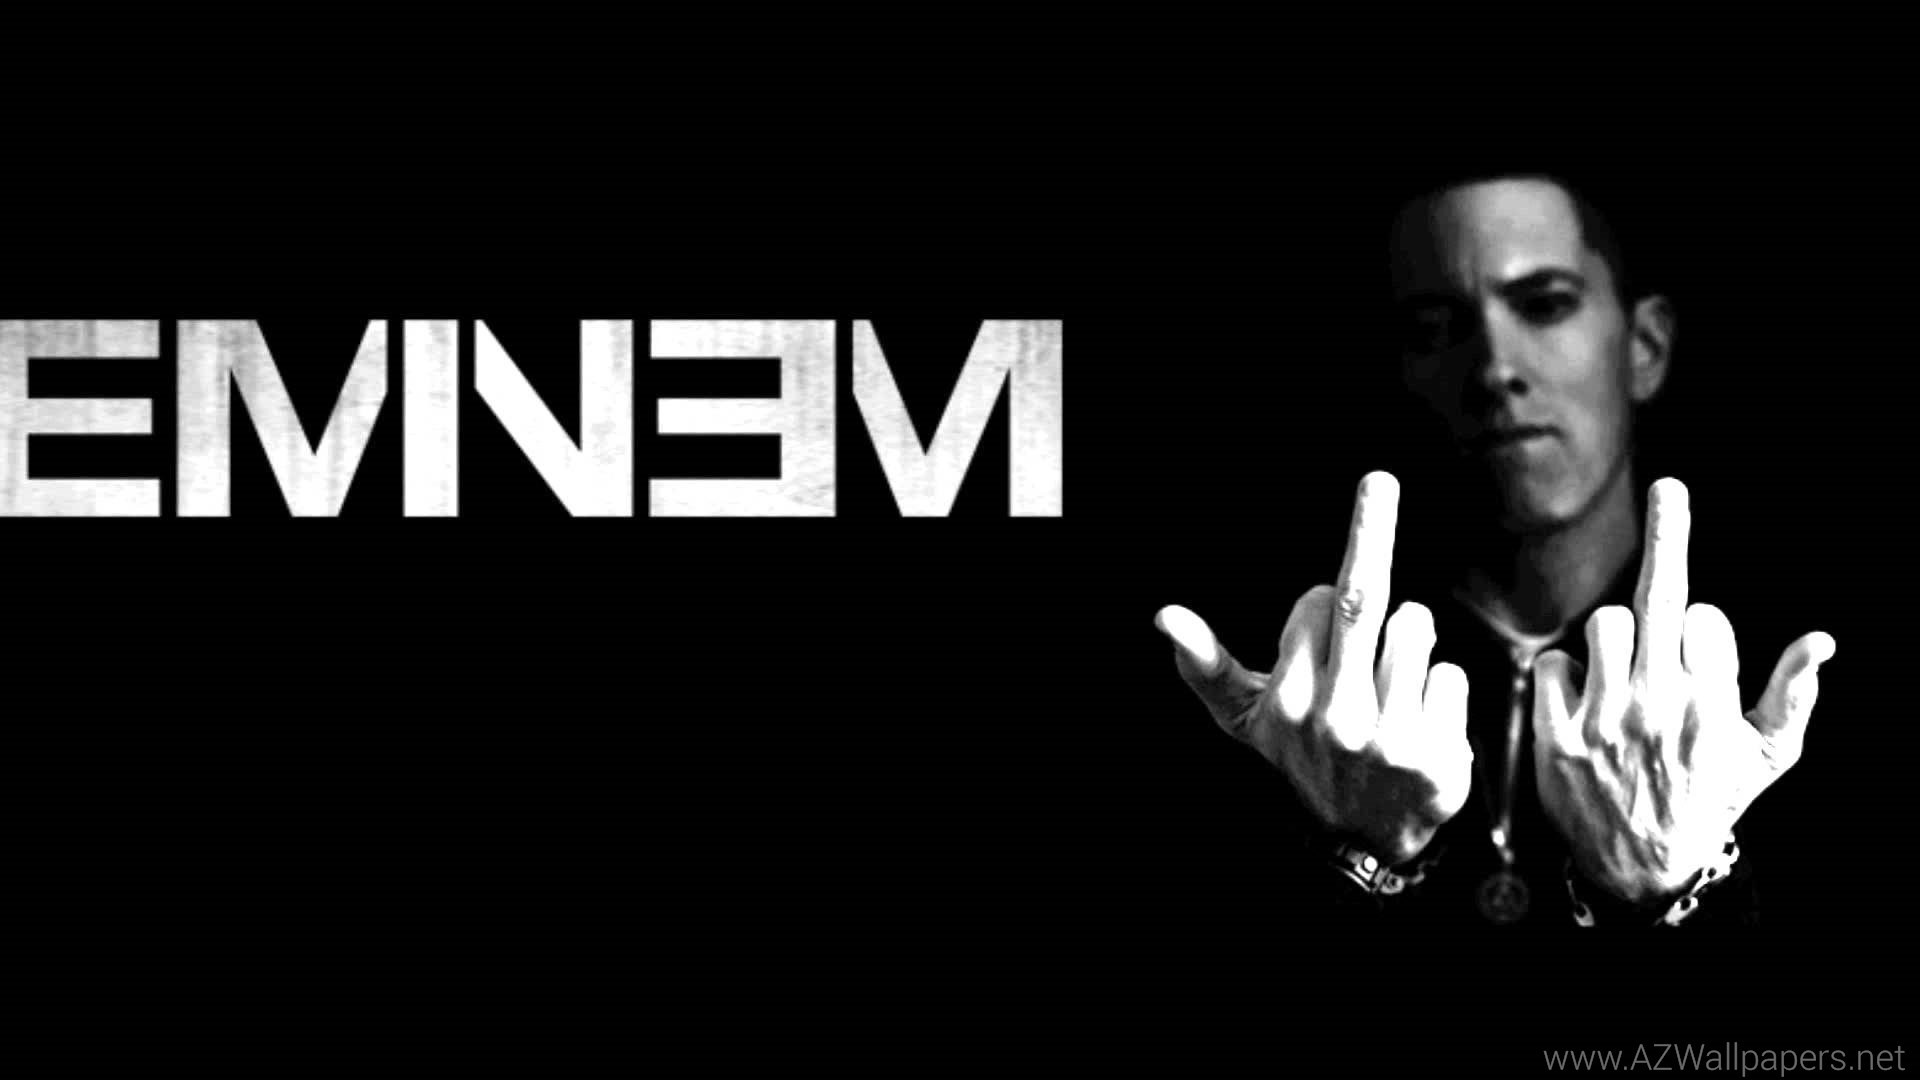 Eminem HD Wallpaper 1080p Image